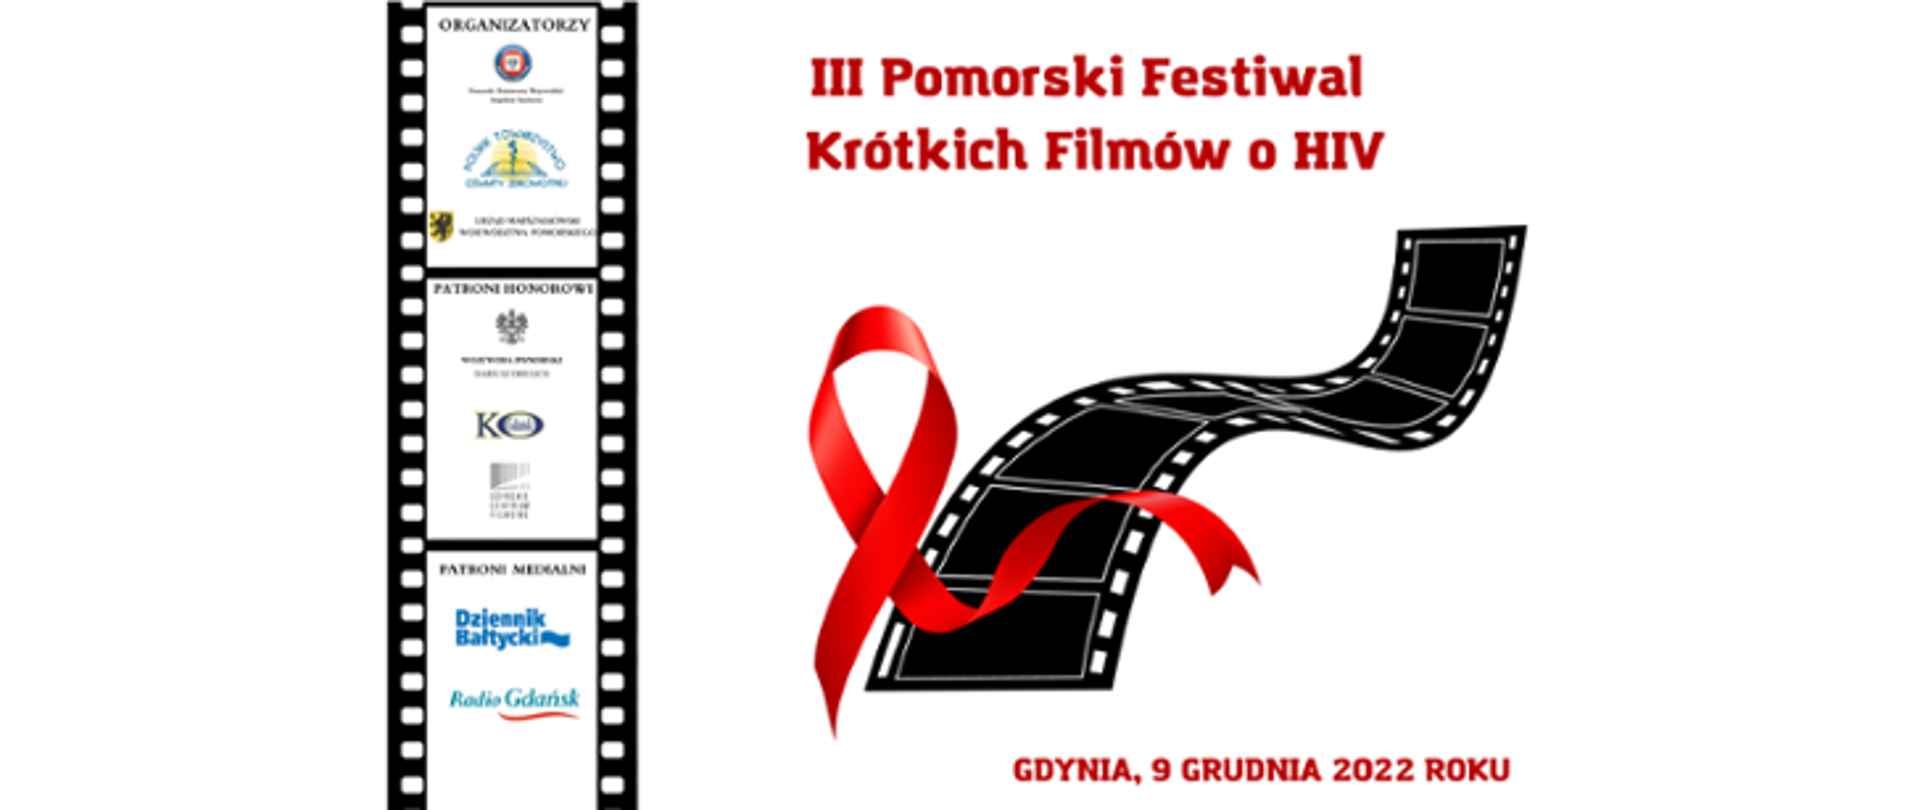 III Pomorski Festiwal Krótkich Filmów o HIV